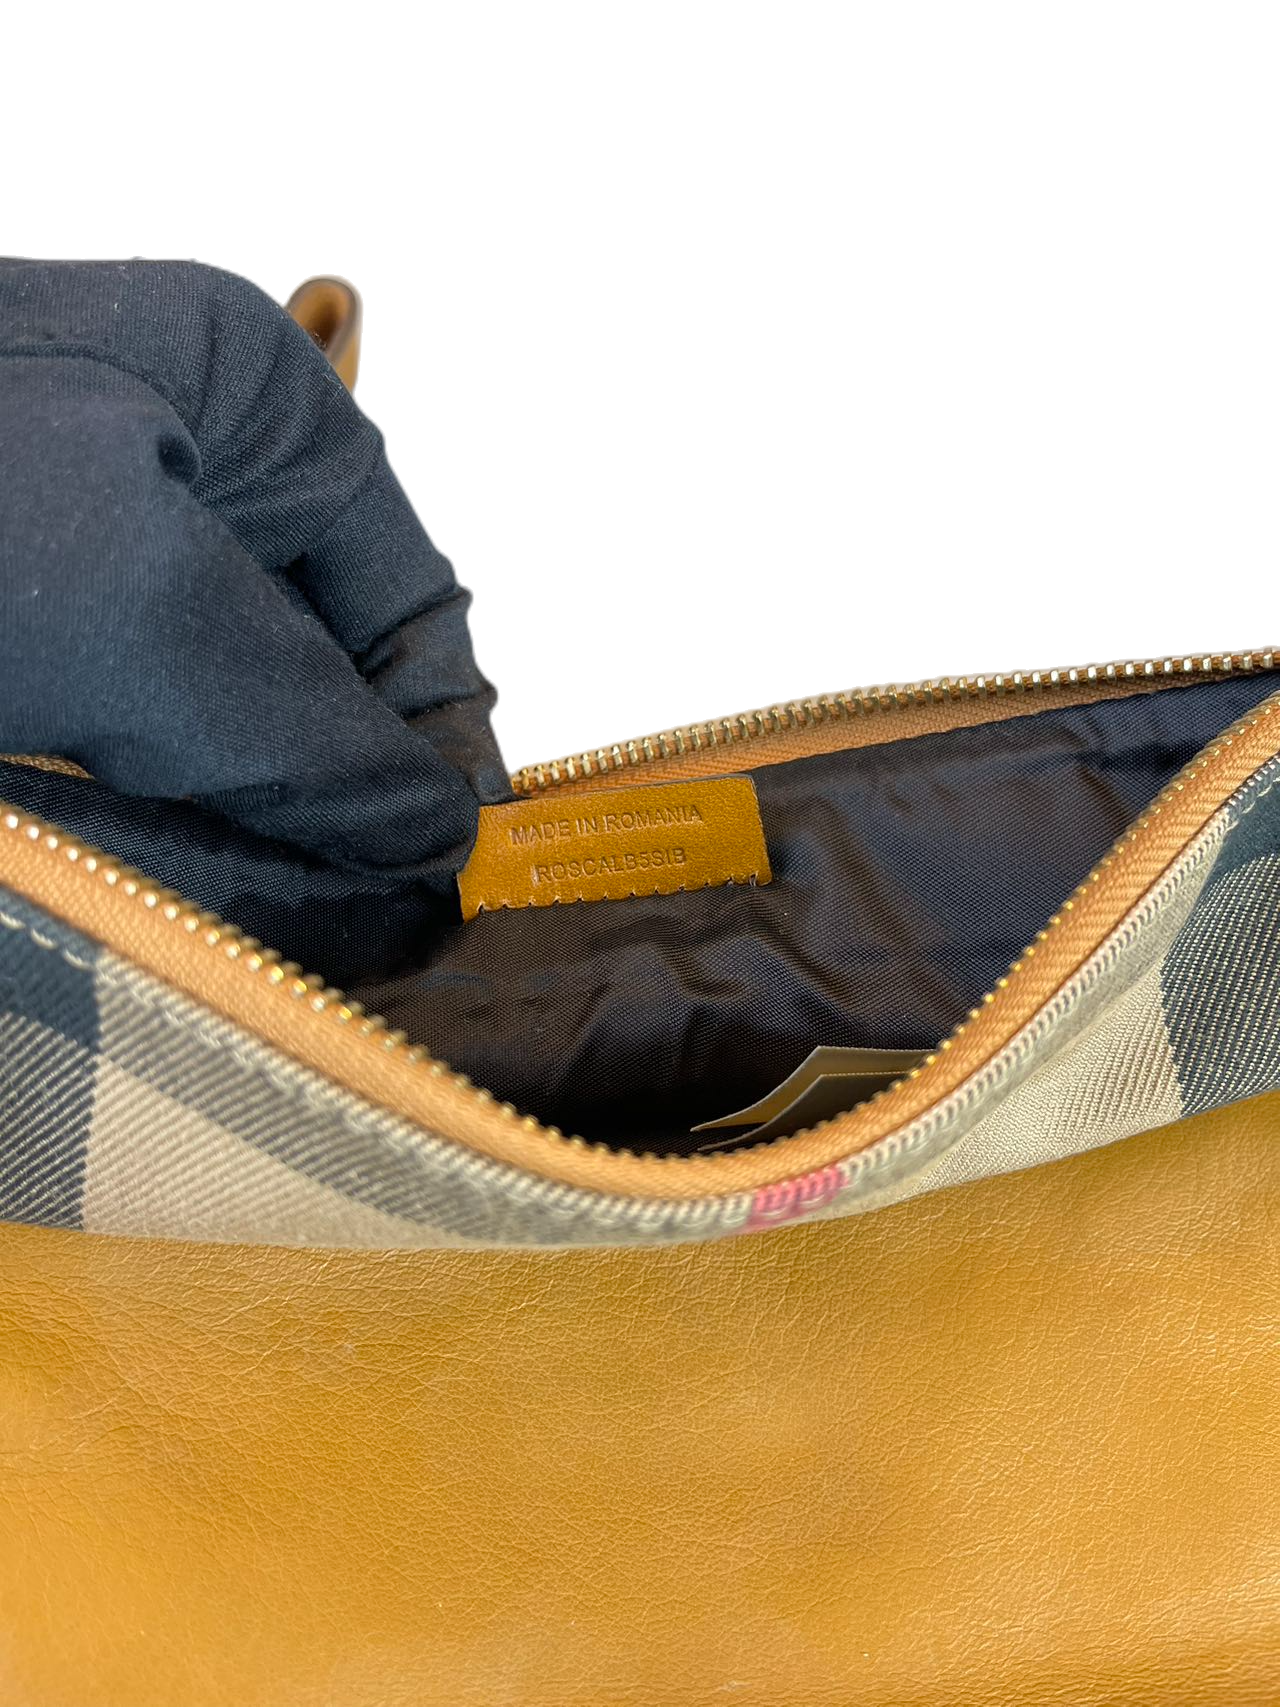 Preloved Burberry Signature Logo Clutches Handbag Pouch